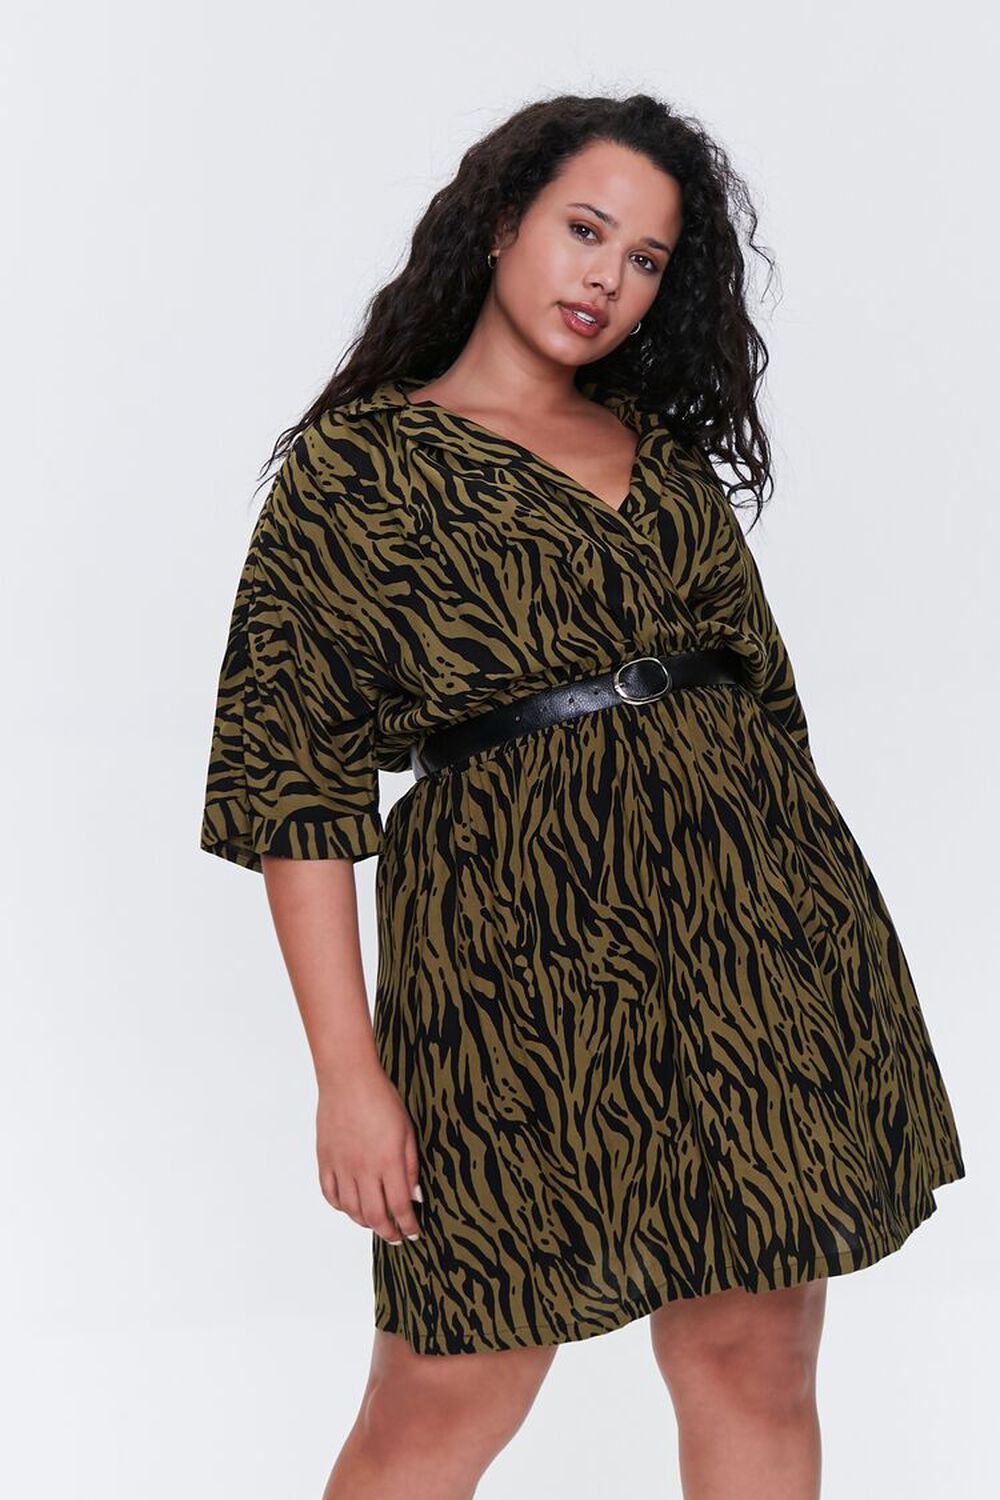 OLIVE/MULTI Plus Size Tiger Striped Dress, image 1